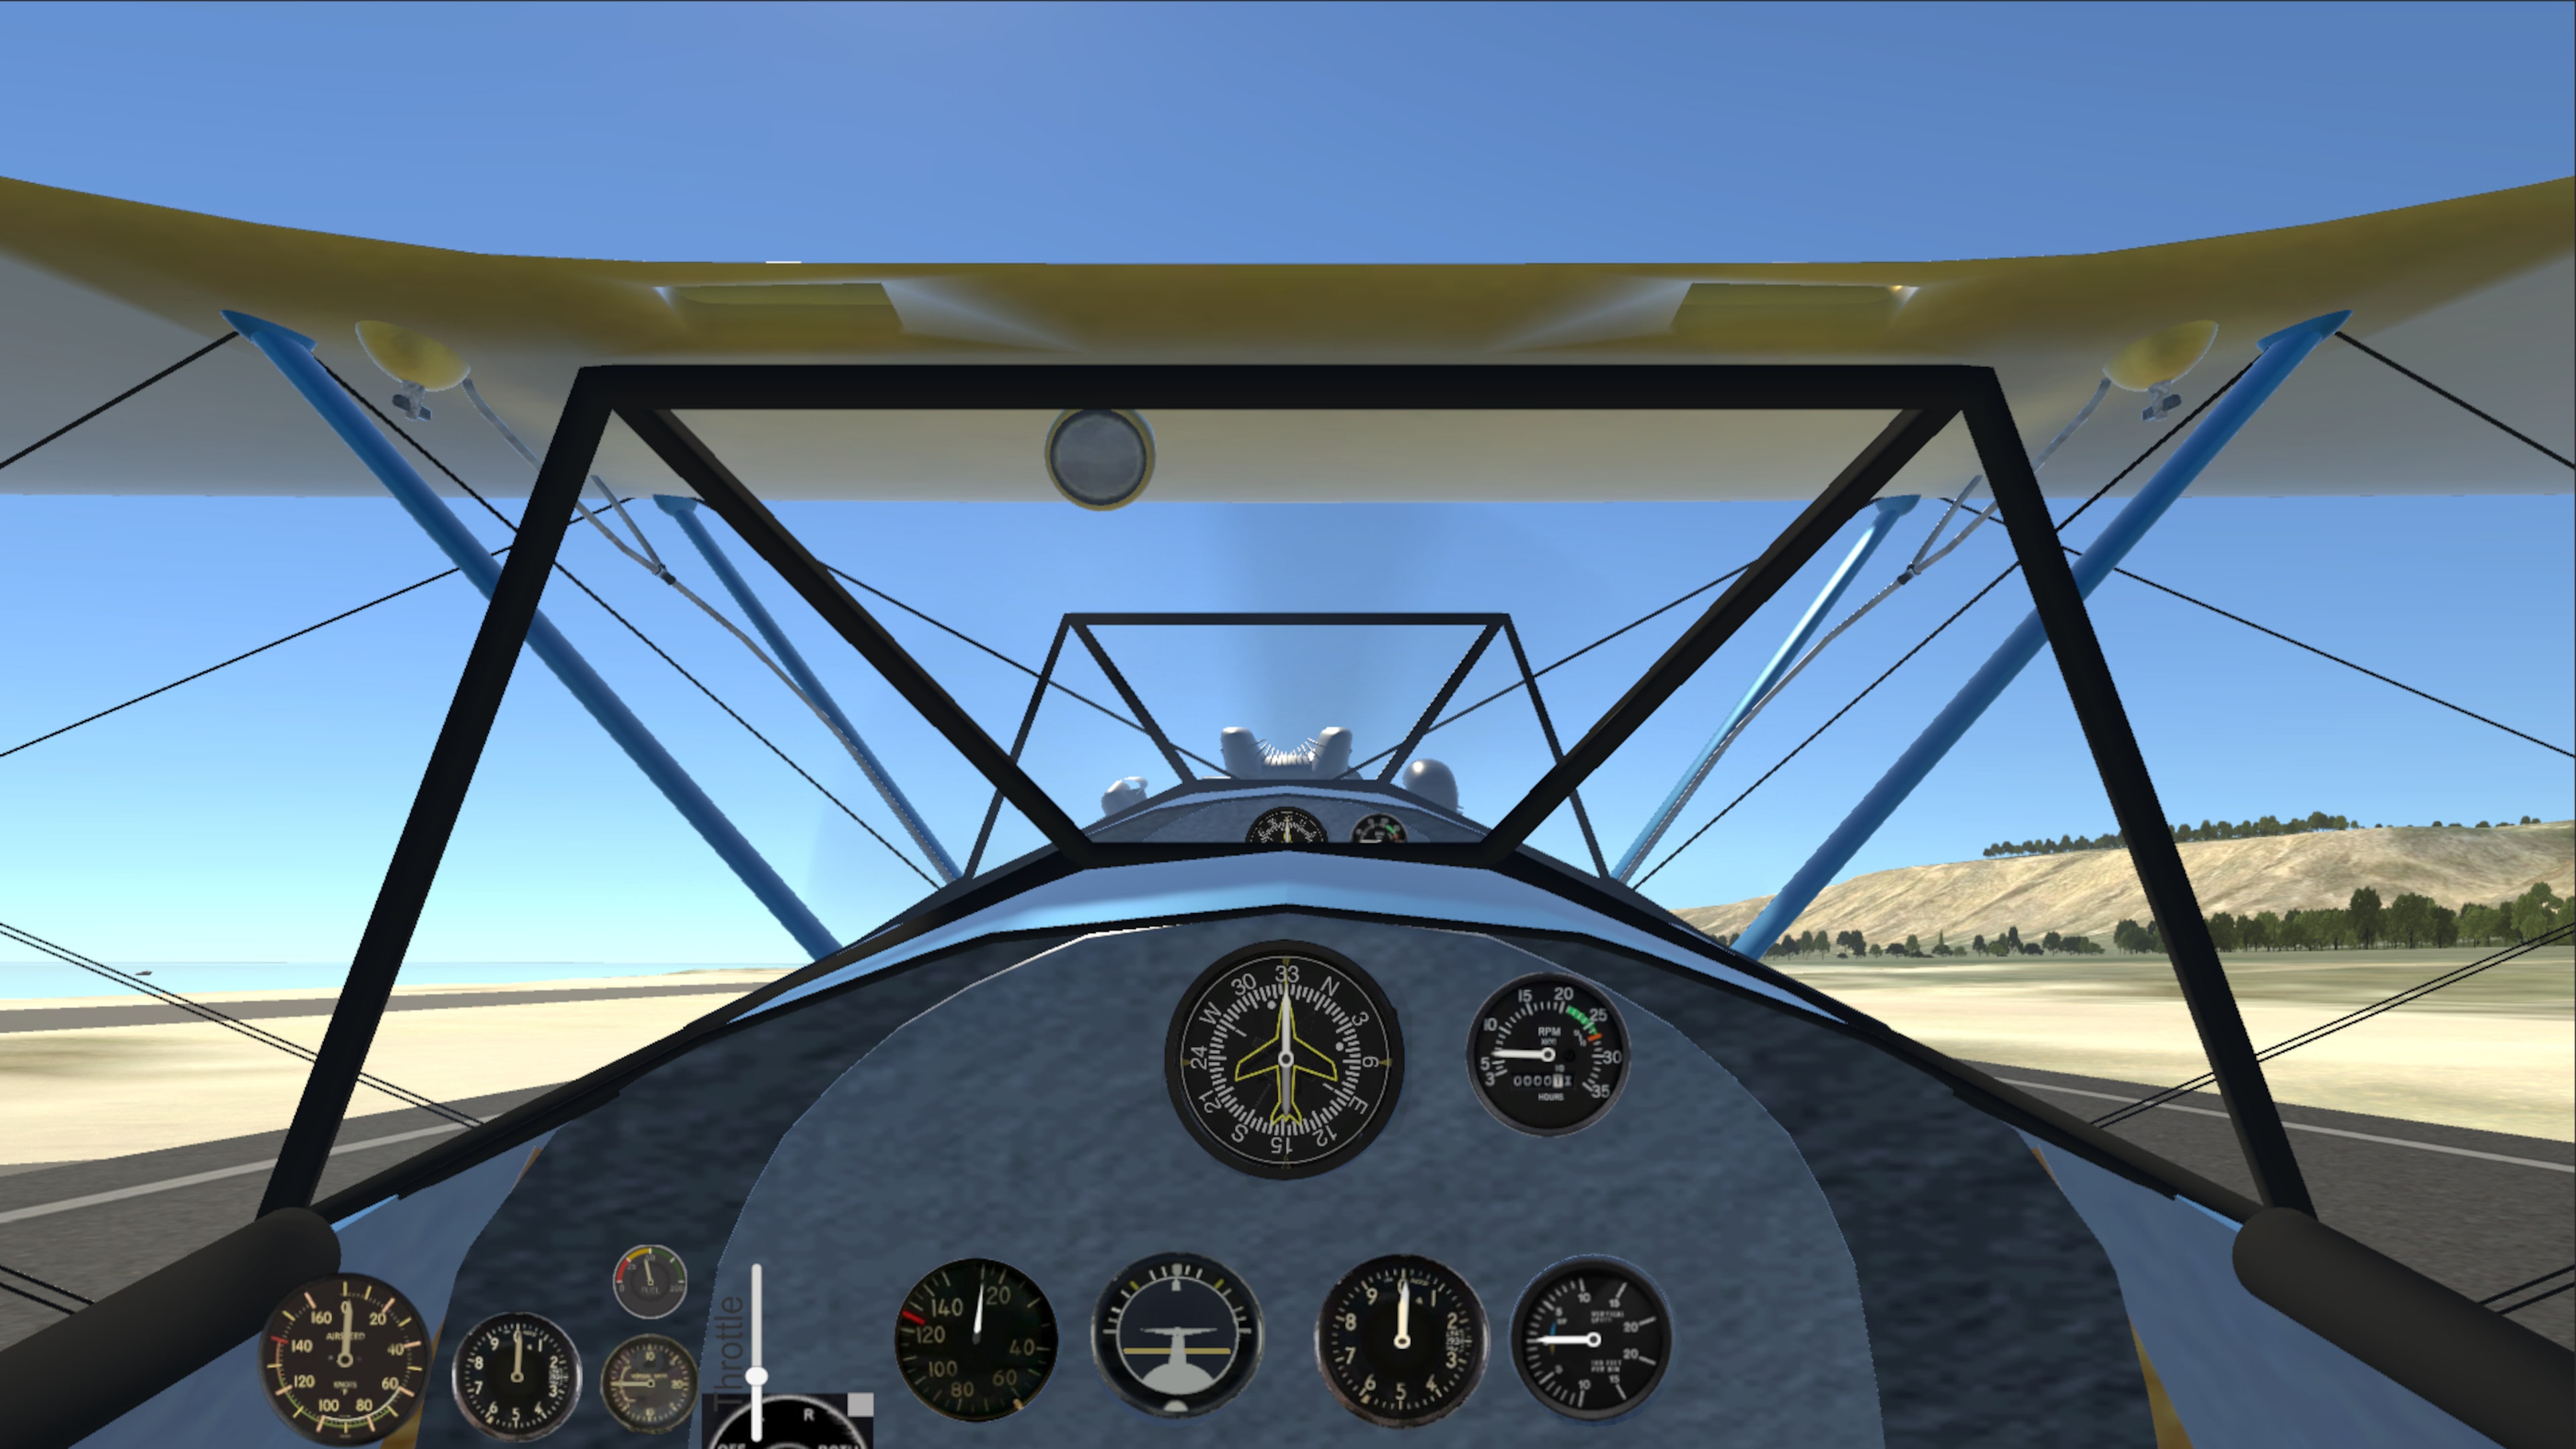 flight simulator ps4 free - Buy flight simulator ps4 free with